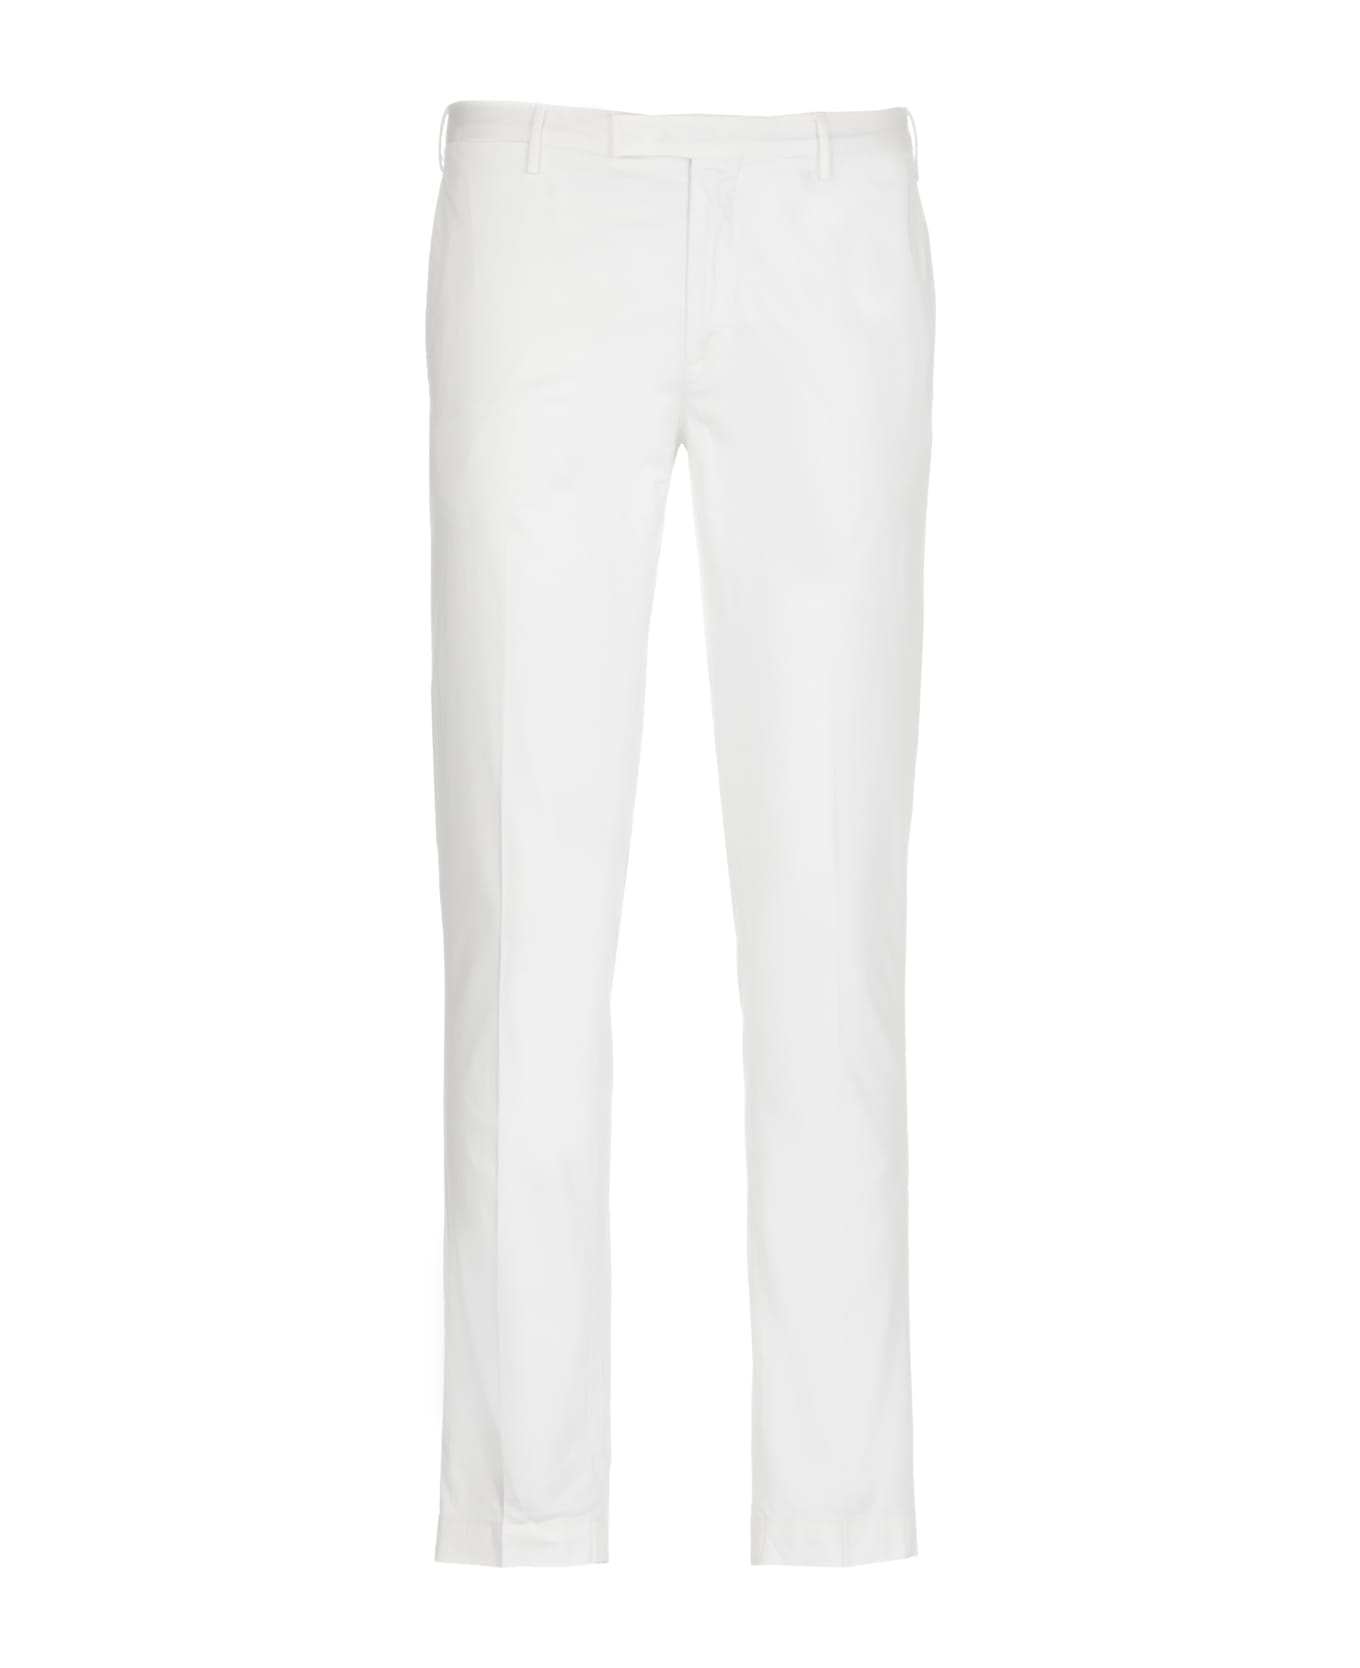 PT Torino Cotton Trousers - White ボトムス